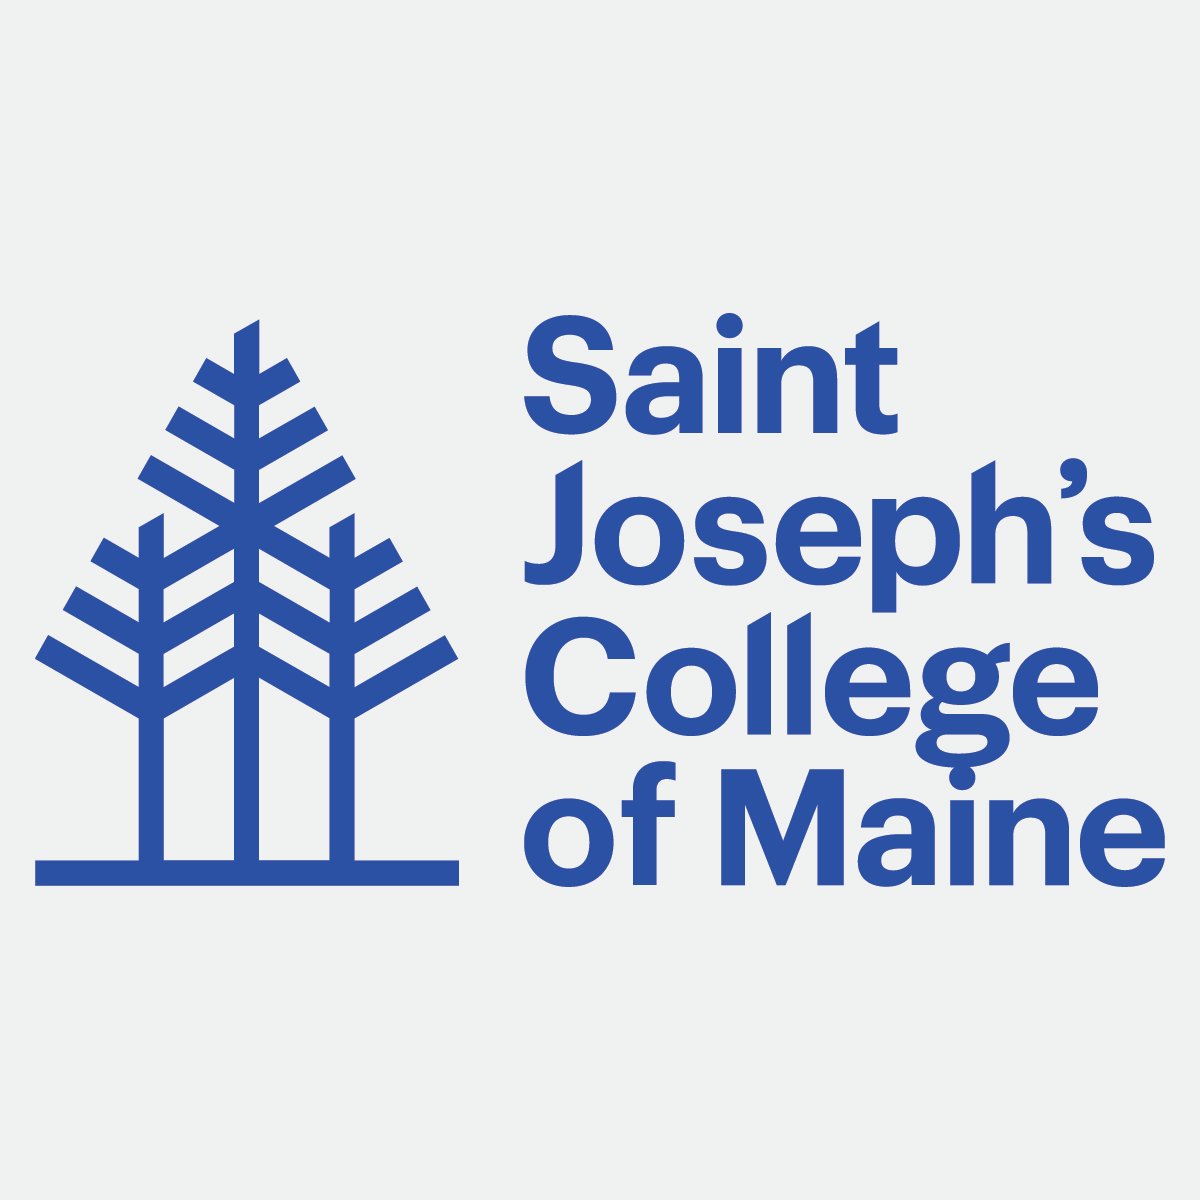 St. josephs college of maine